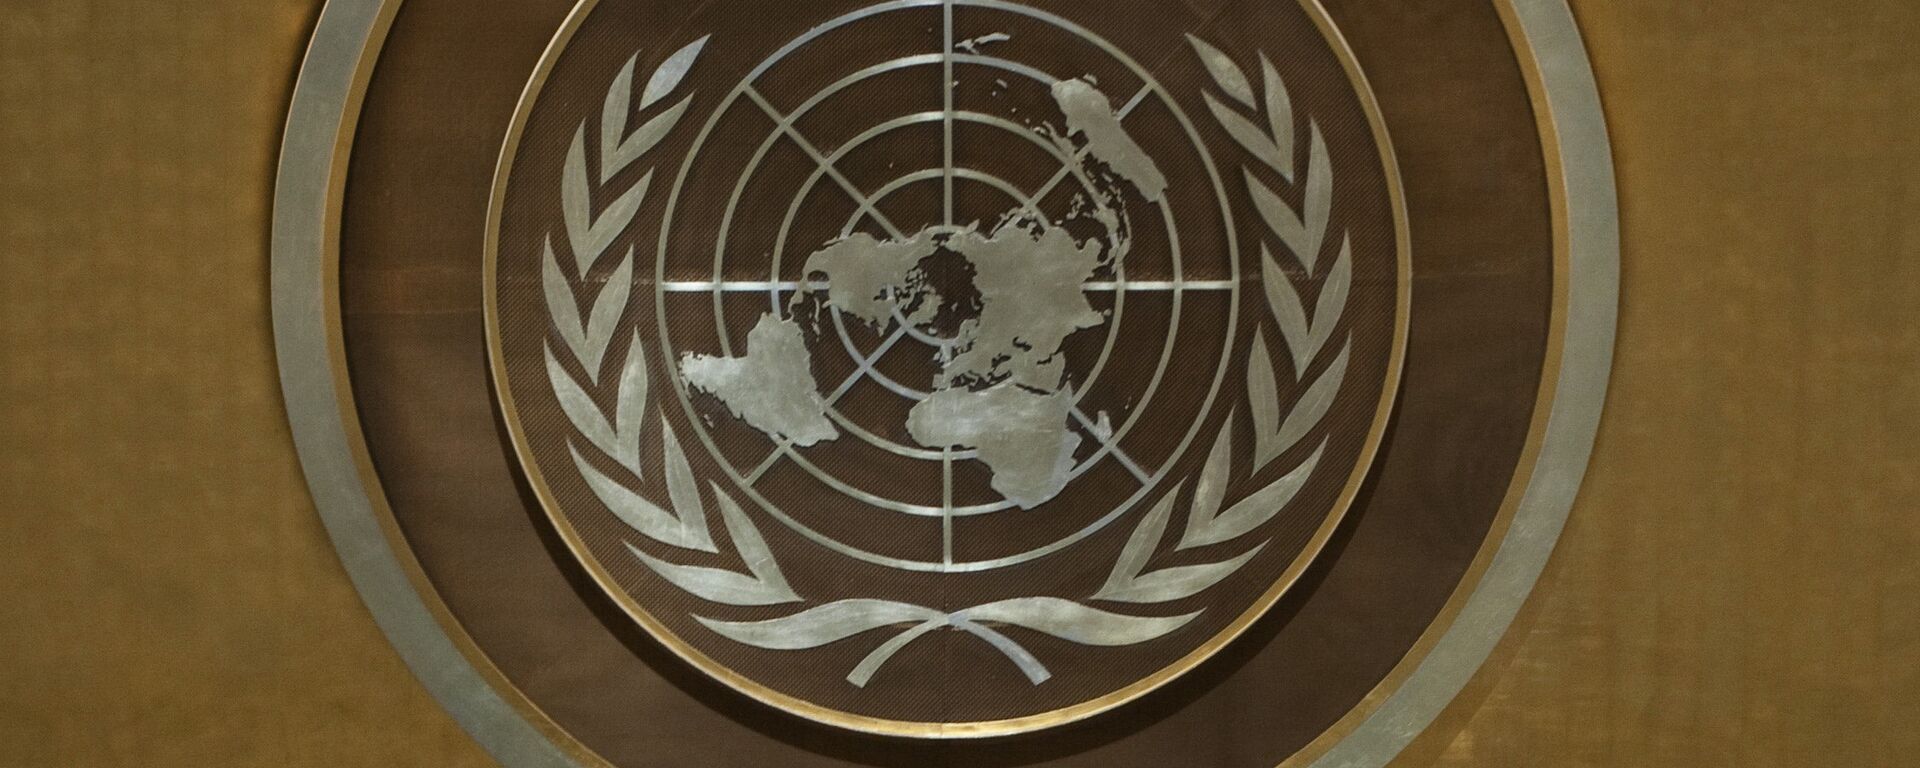 Эмблема ООН, архивное фото - Sputnik Тоҷикистон, 1920, 22.12.2021